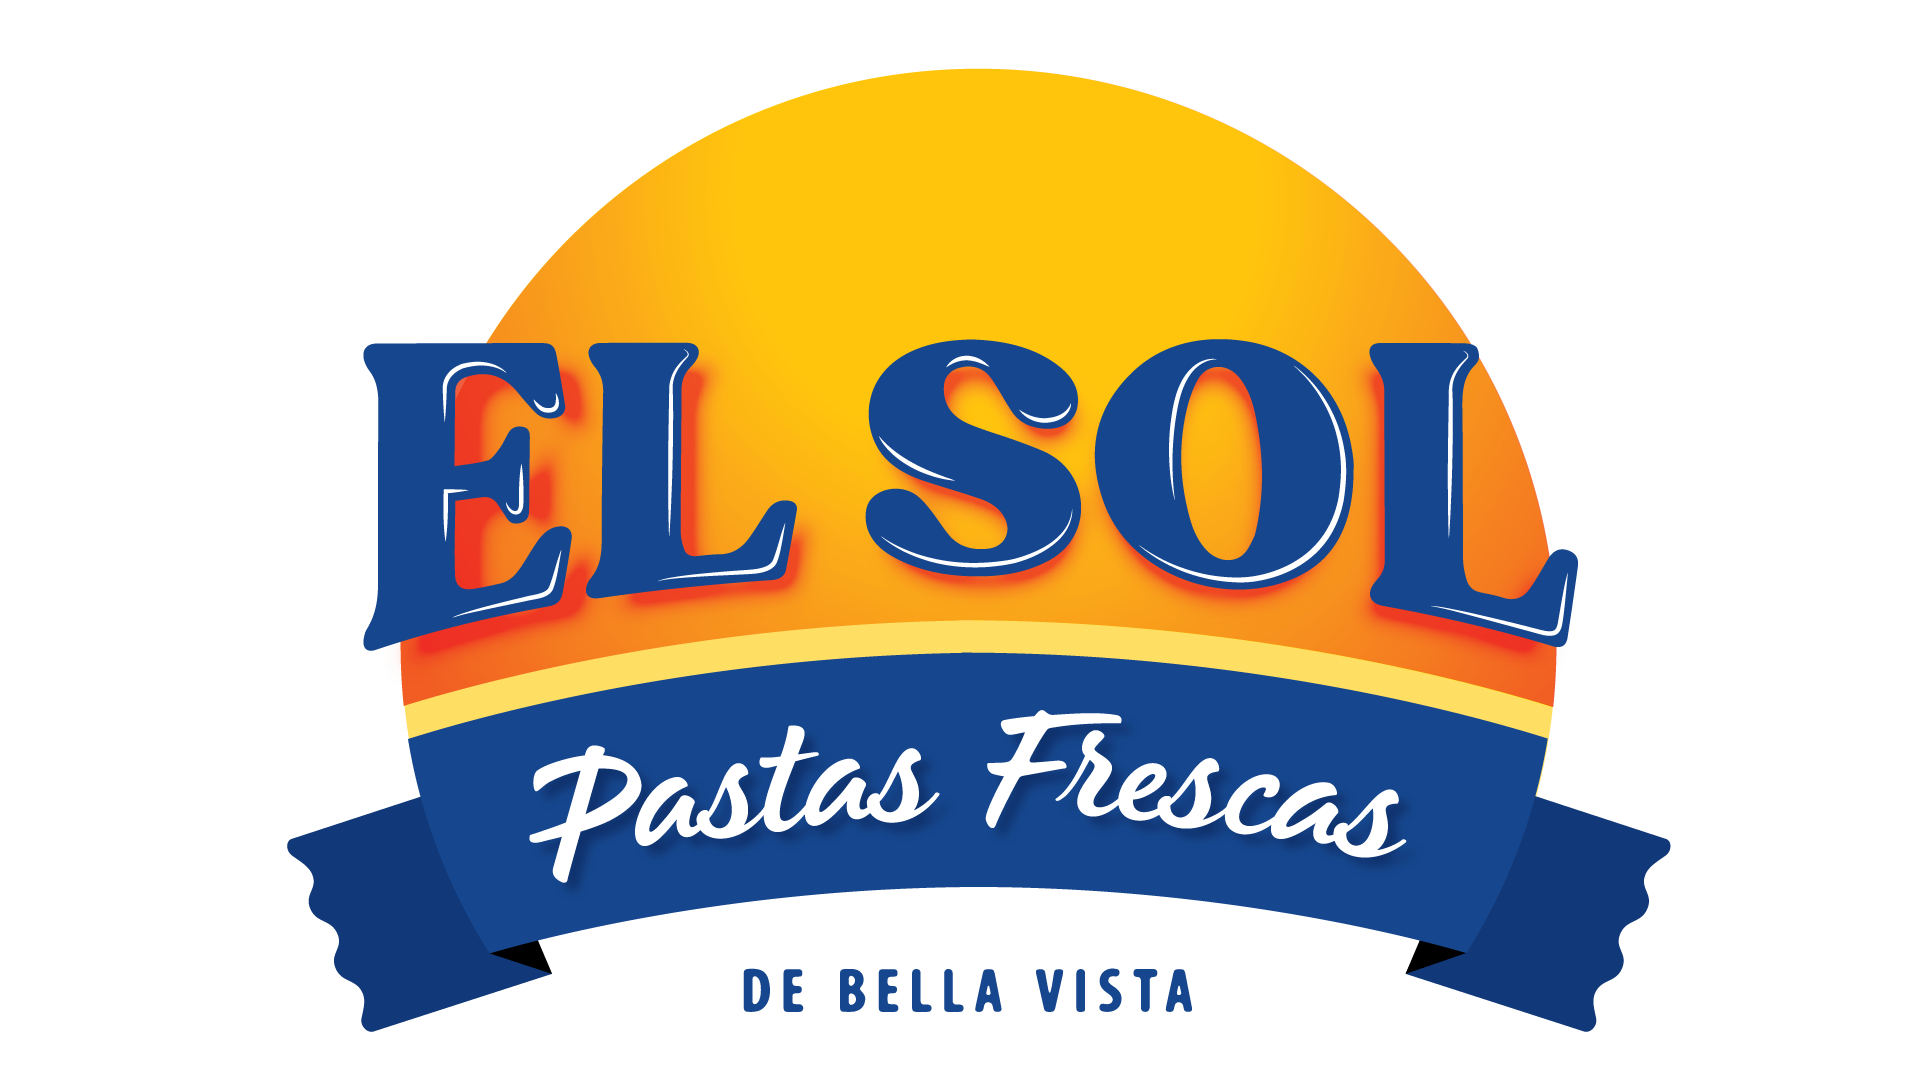 El Sol de Bella Vista Logo